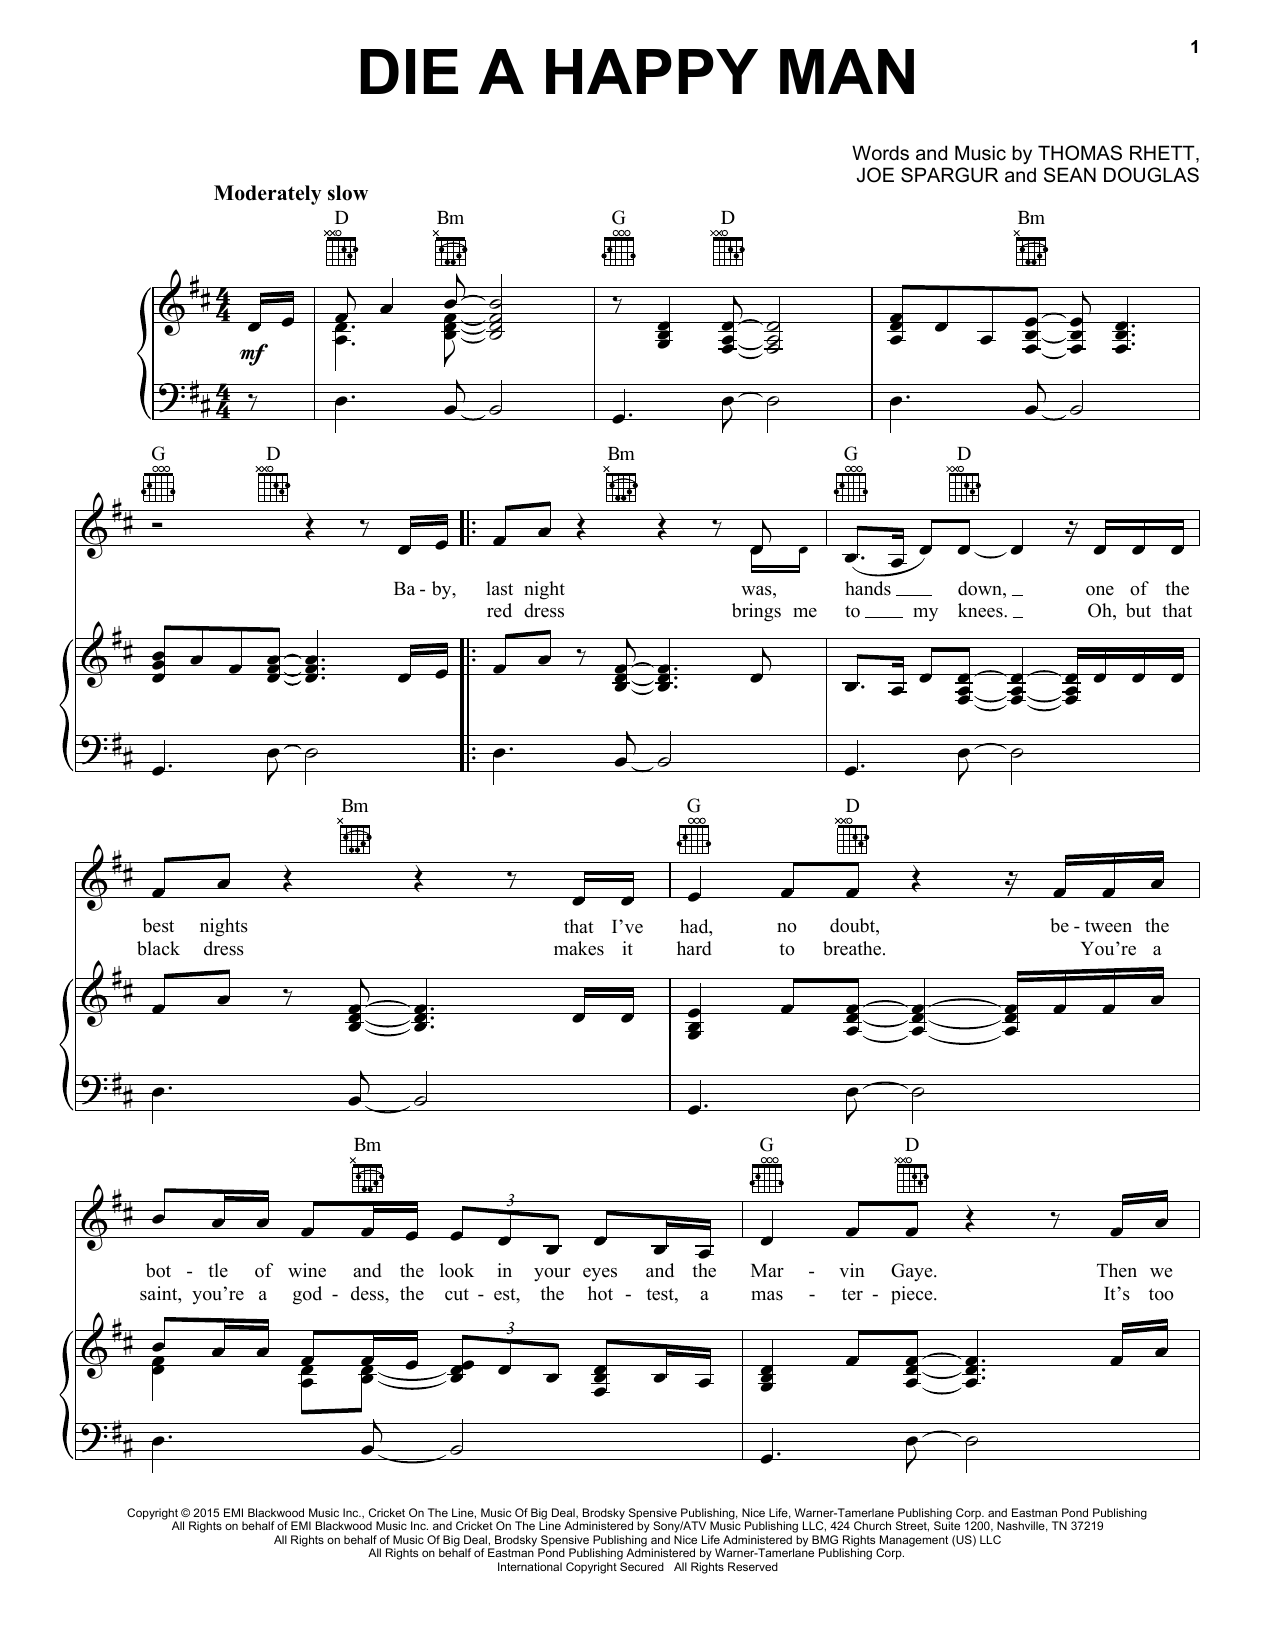 Thomas Rhett Die A Happy Man Sheet Music Notes & Chords for Clarinet - Download or Print PDF